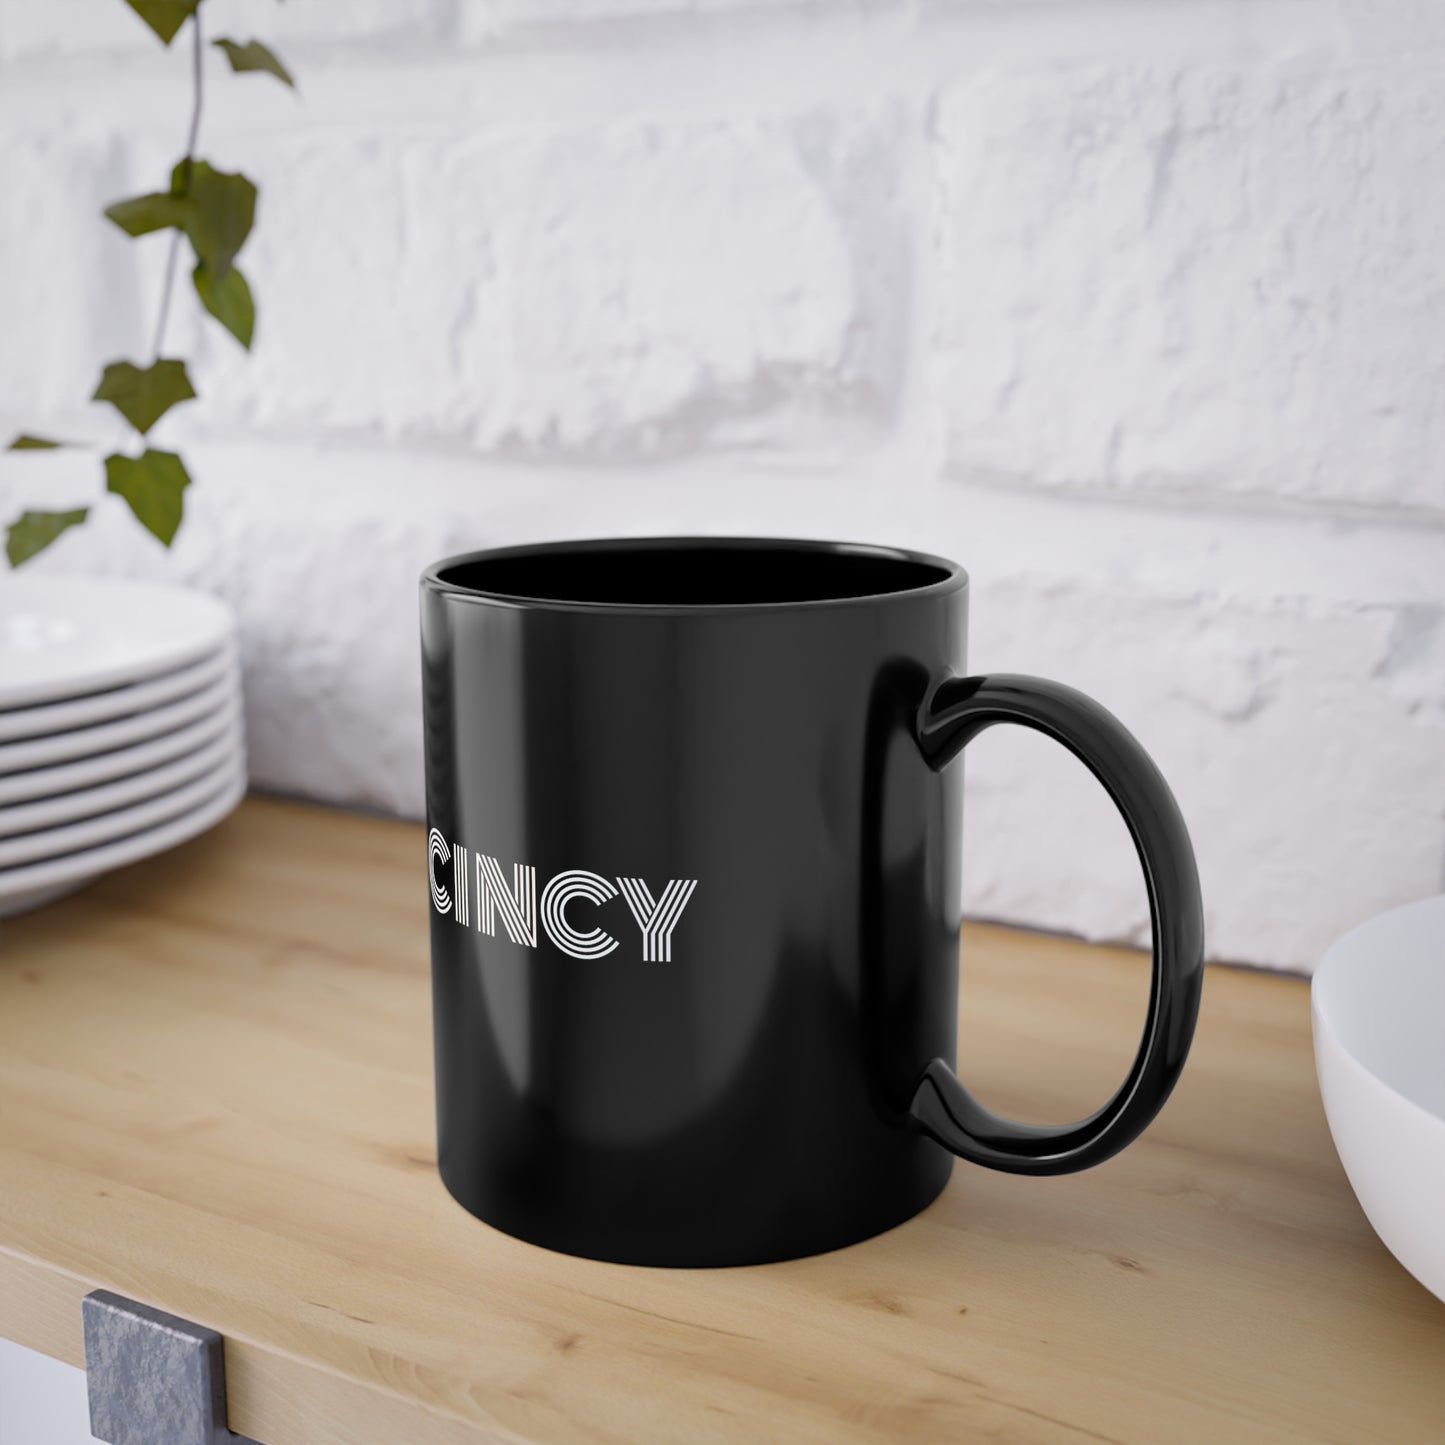 CINCY, CITY MUG, Black Coffee Cup, 11oz